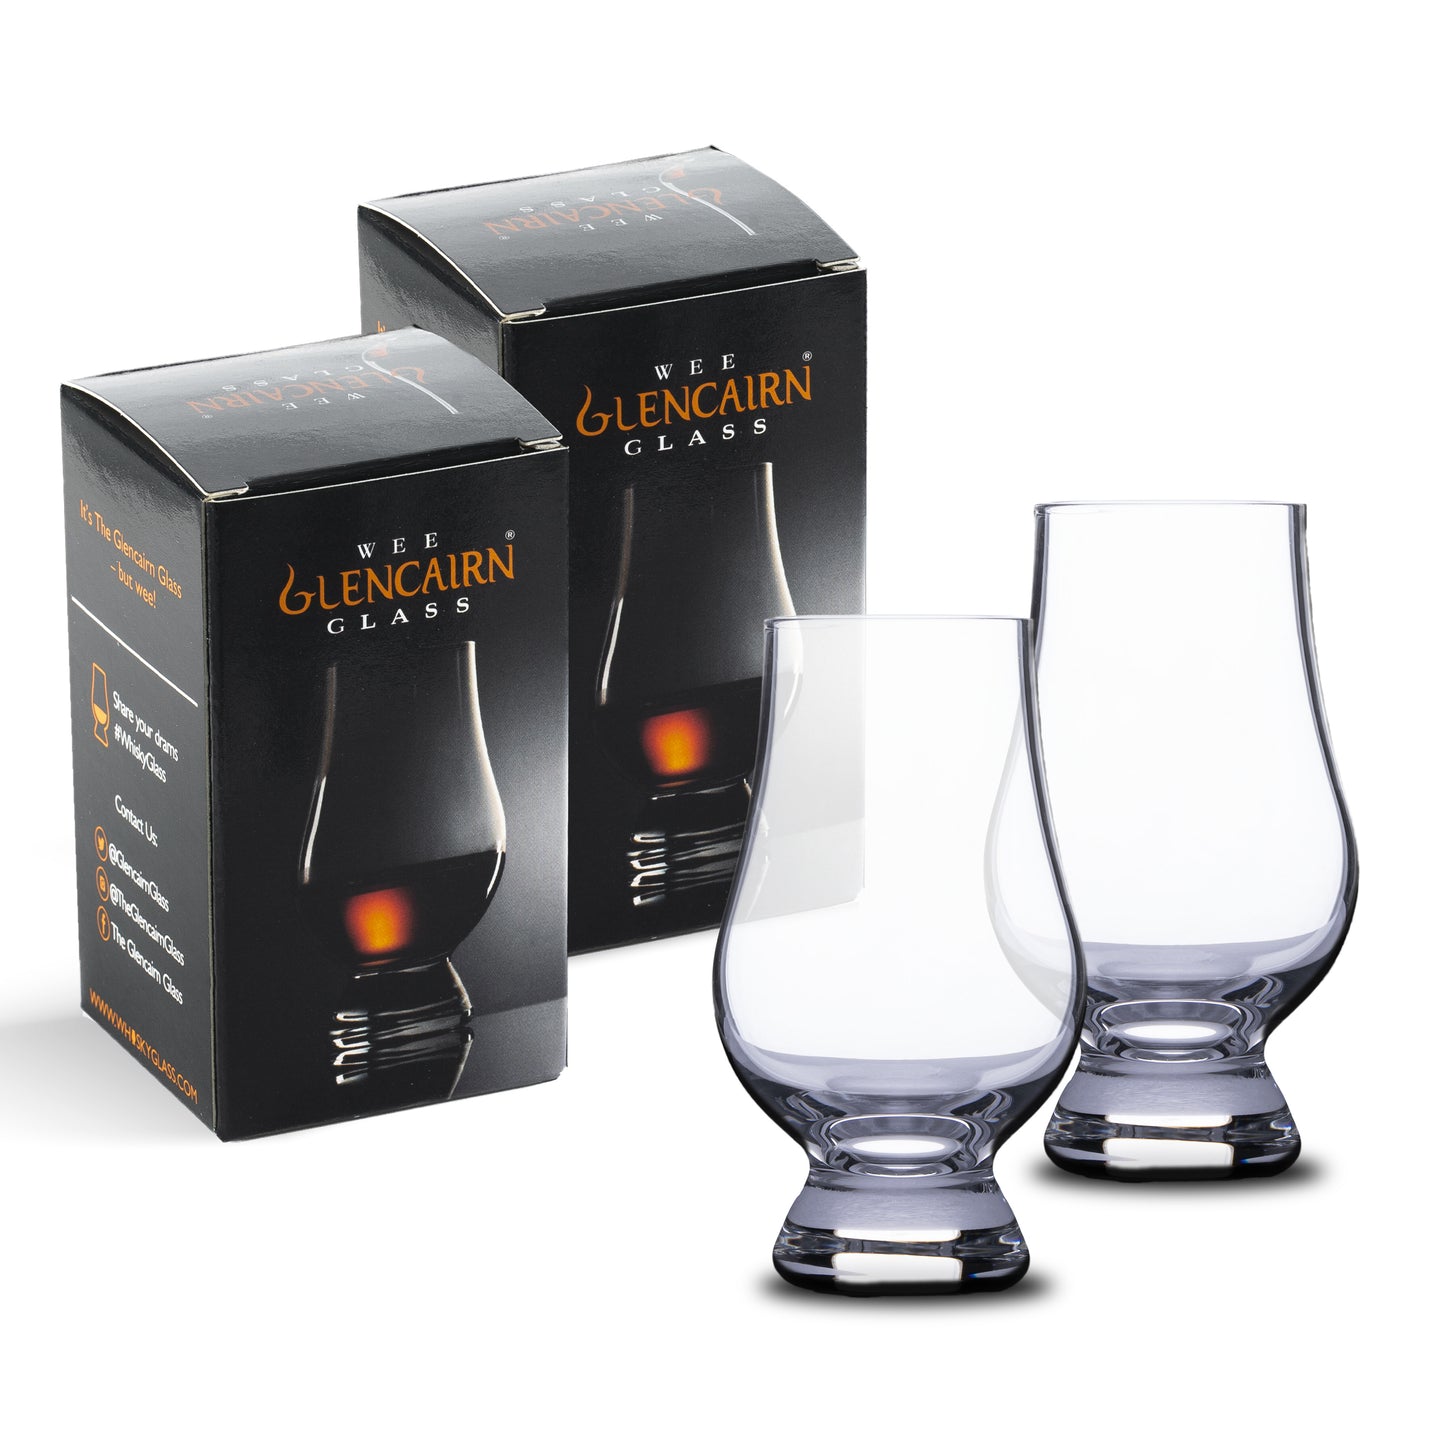 The WEE  Glencairn Glass (Miniature Glass, Single & Multi-Packs)